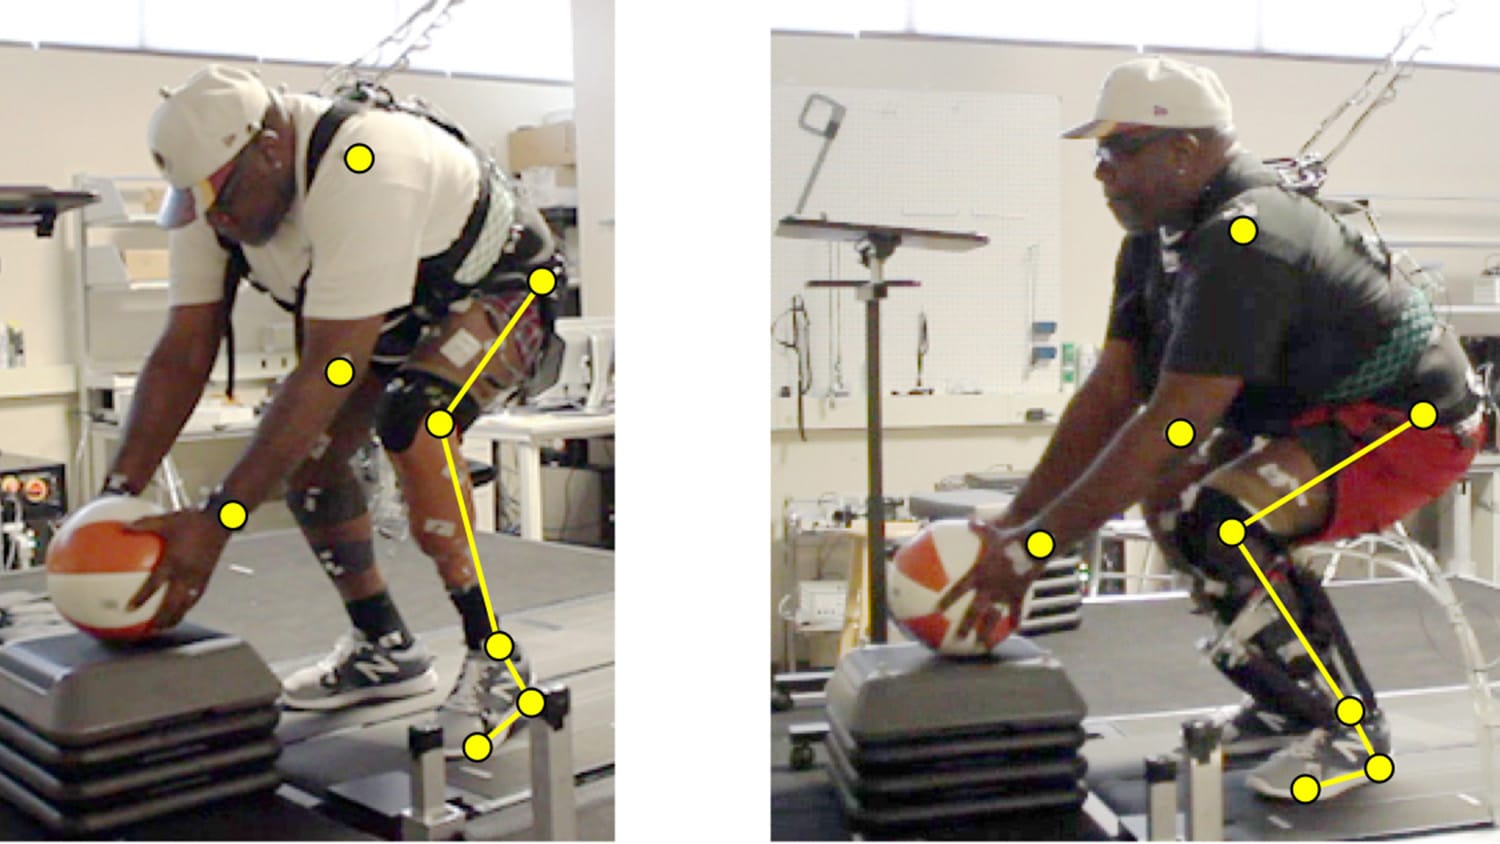 man uses lower-leg prosthesis to perform exercises